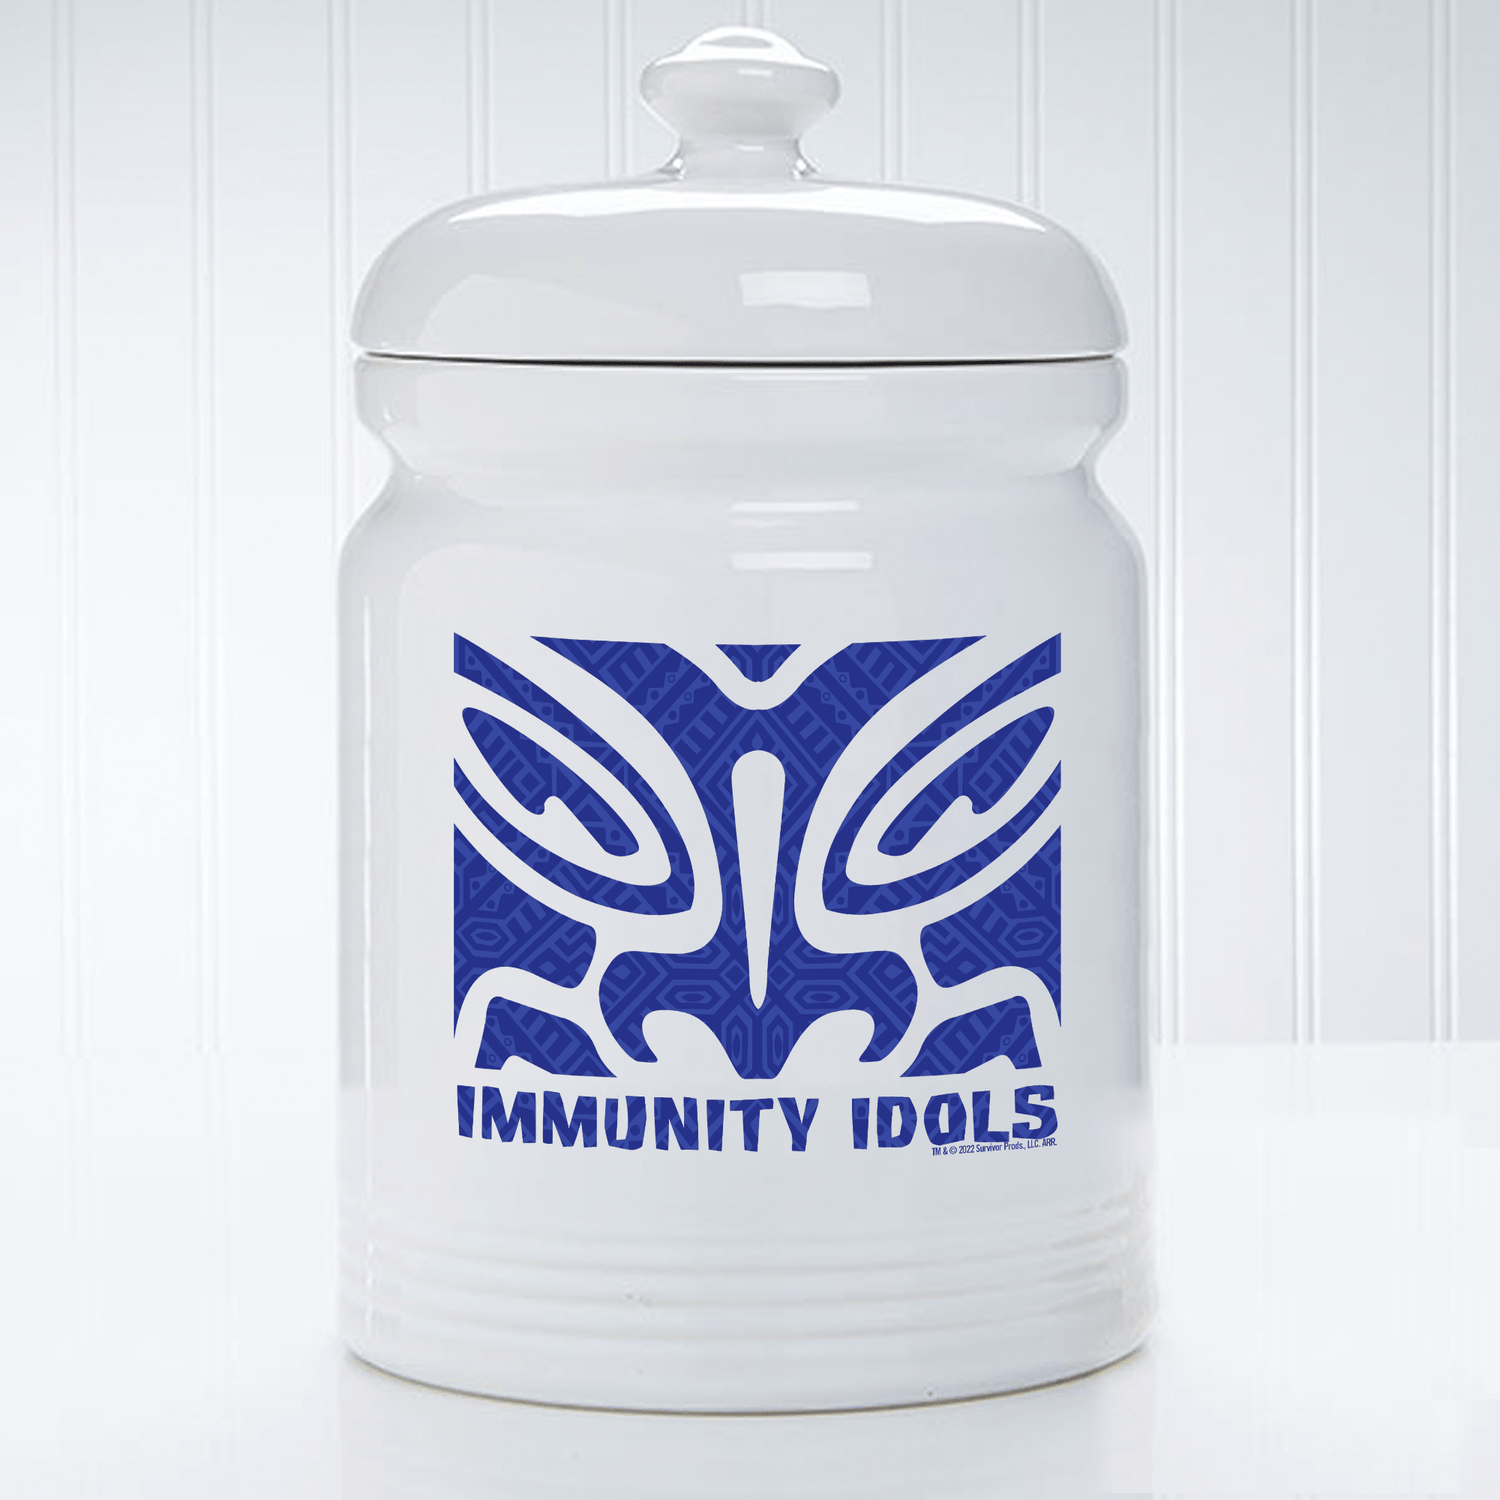 Survivor Immunity Idols Treat Jar - Paramount Shop